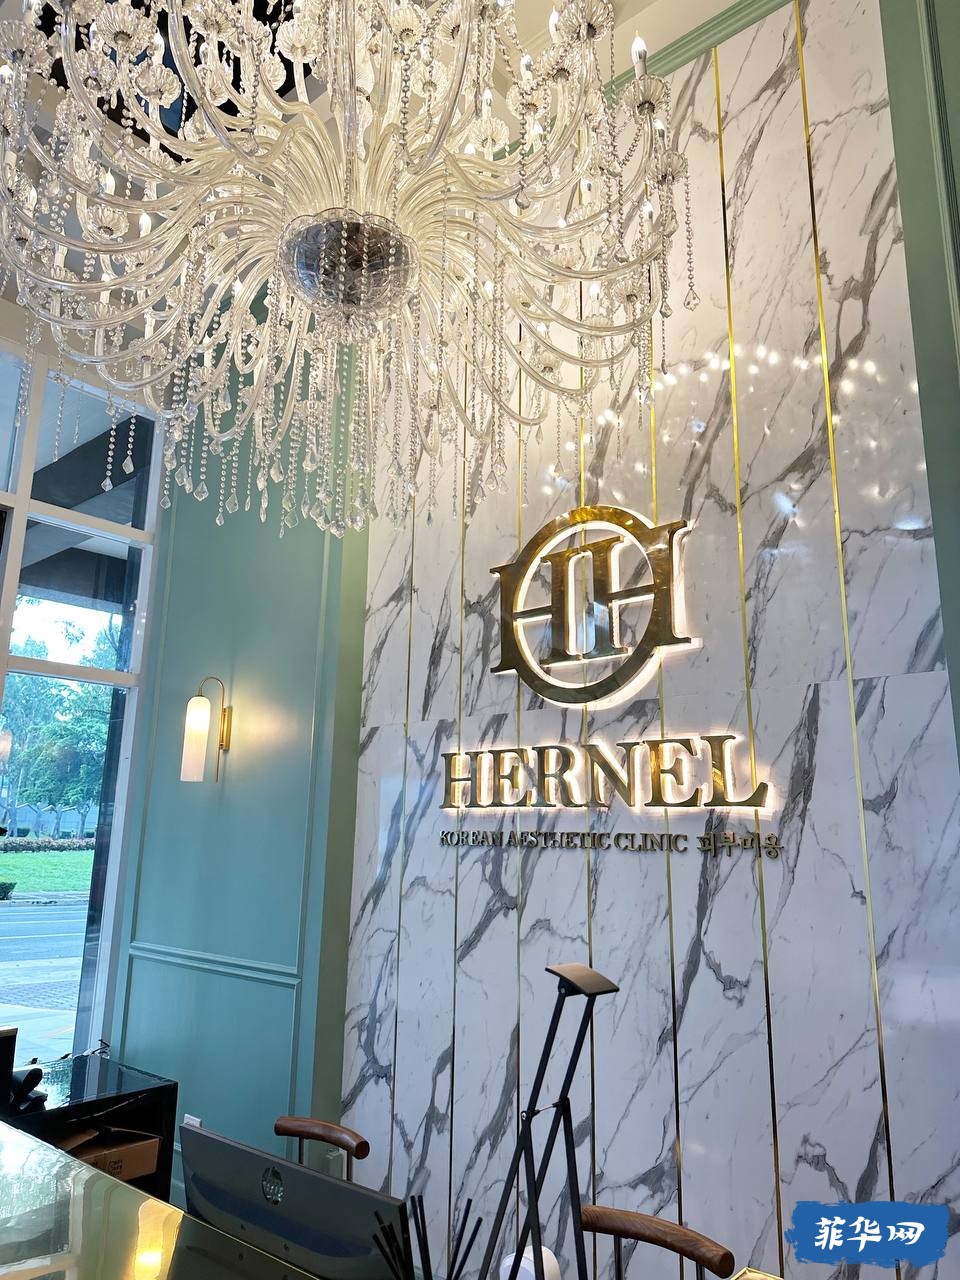 HERNEL菲律宾韩式美容诊所